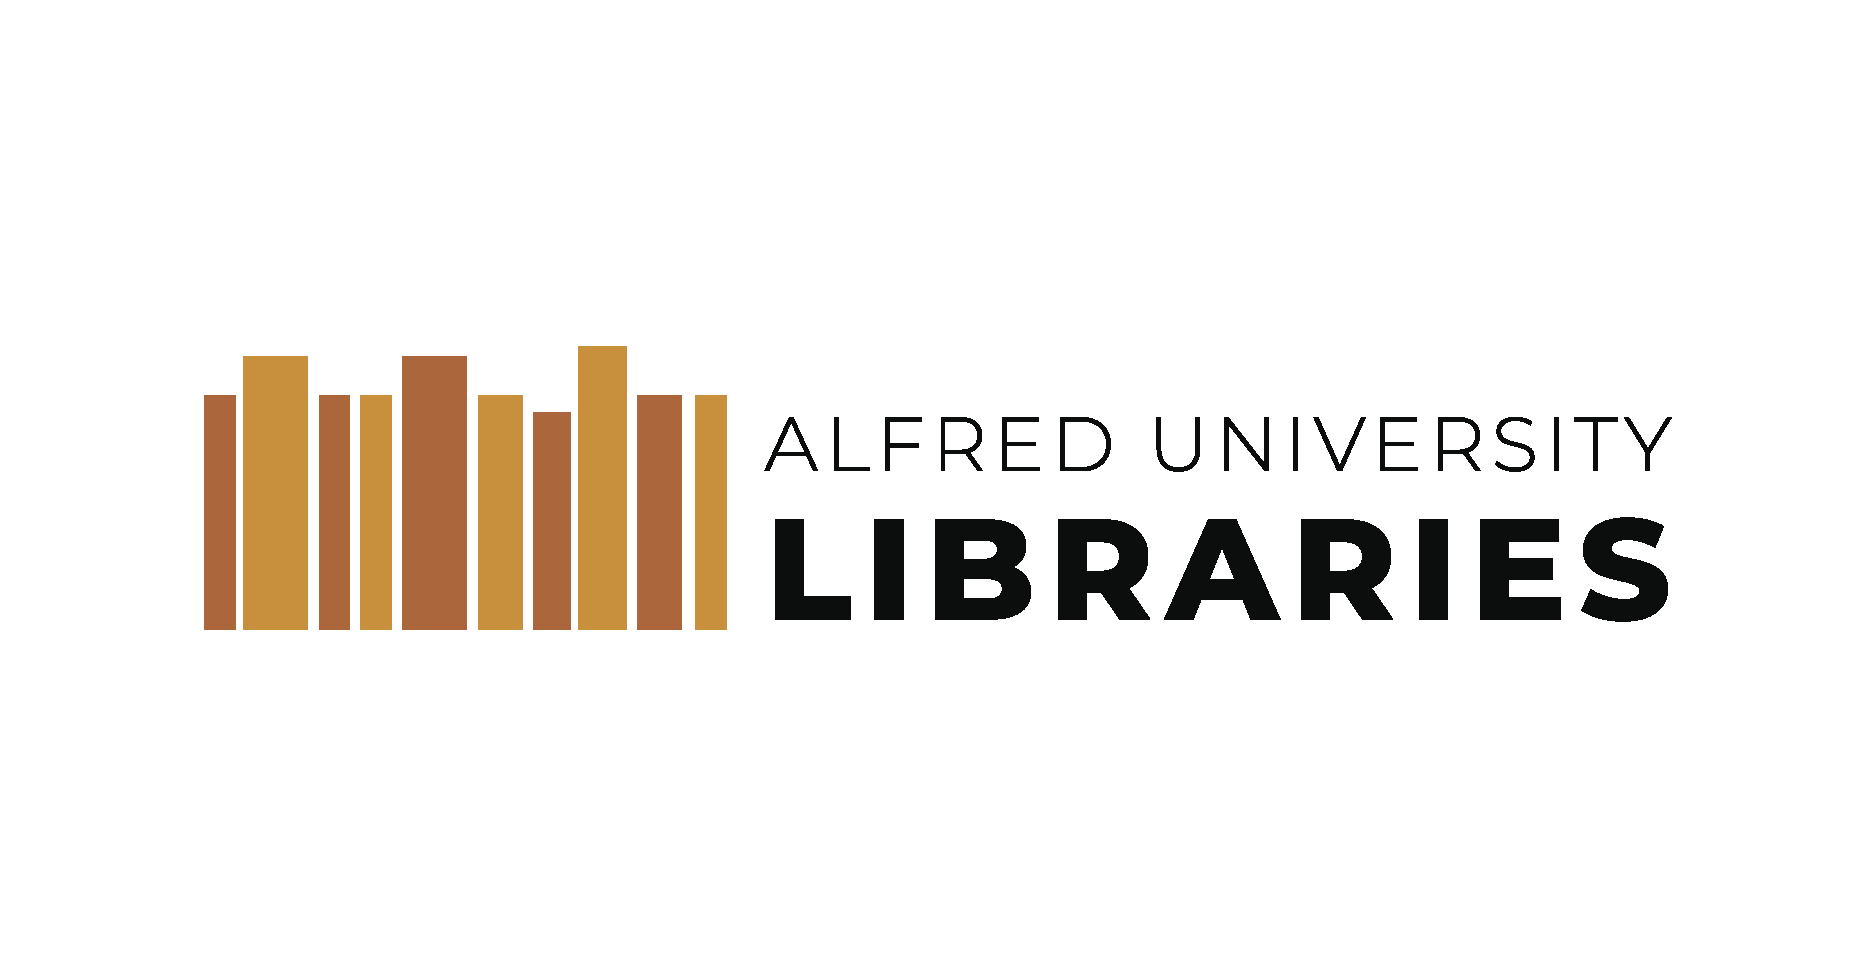 ALfred University Libraries Logo (Bookish)